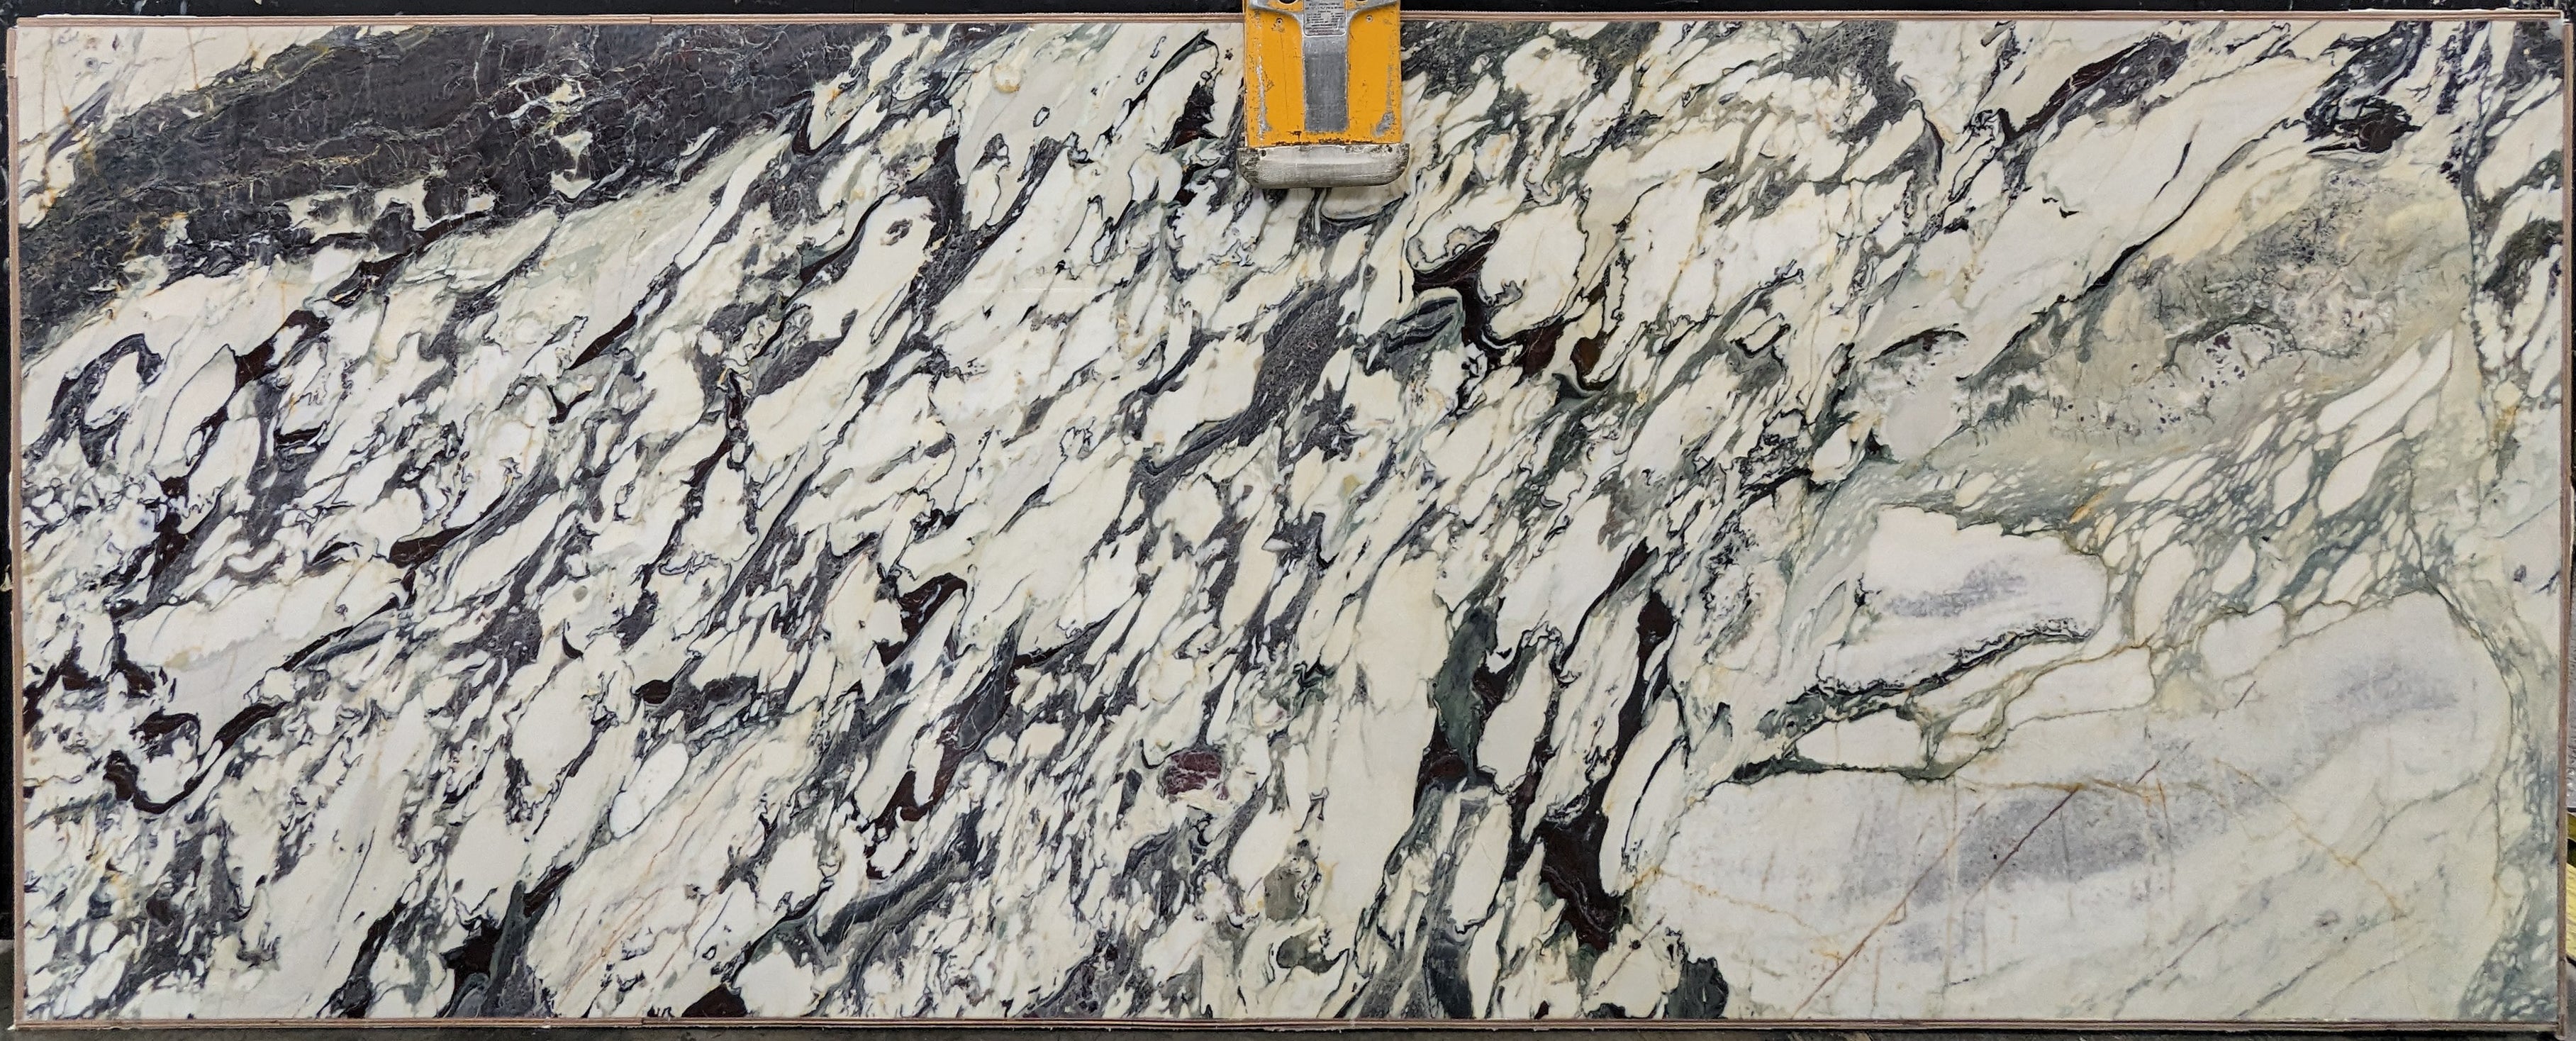  Breccia Capraia Marble Slab 3/4  Polished Stone - 96115#52 -  49x129 